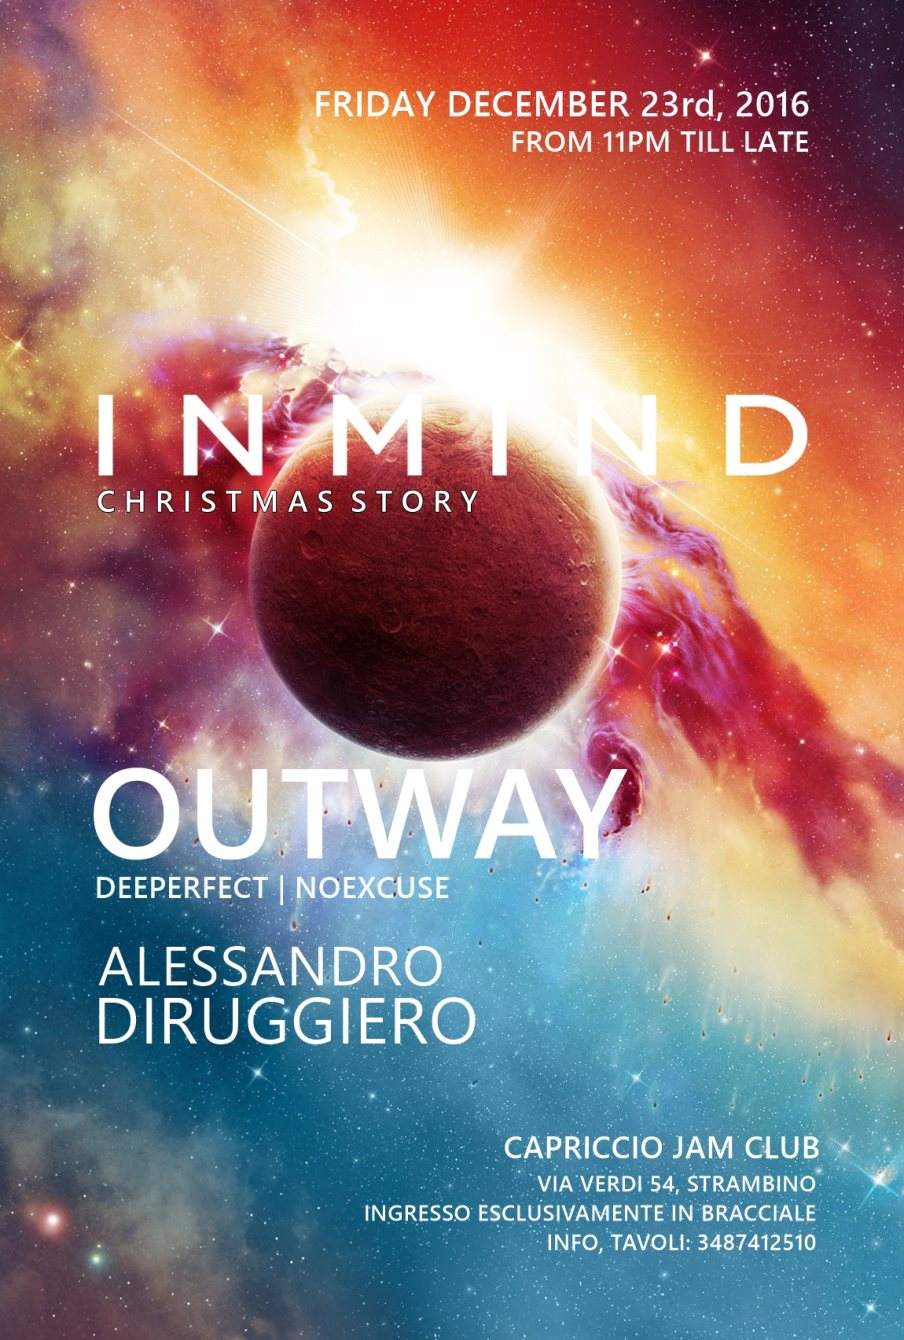 Inmind Christmas Story with Outway, Alessandro Diruggiero - Página trasera